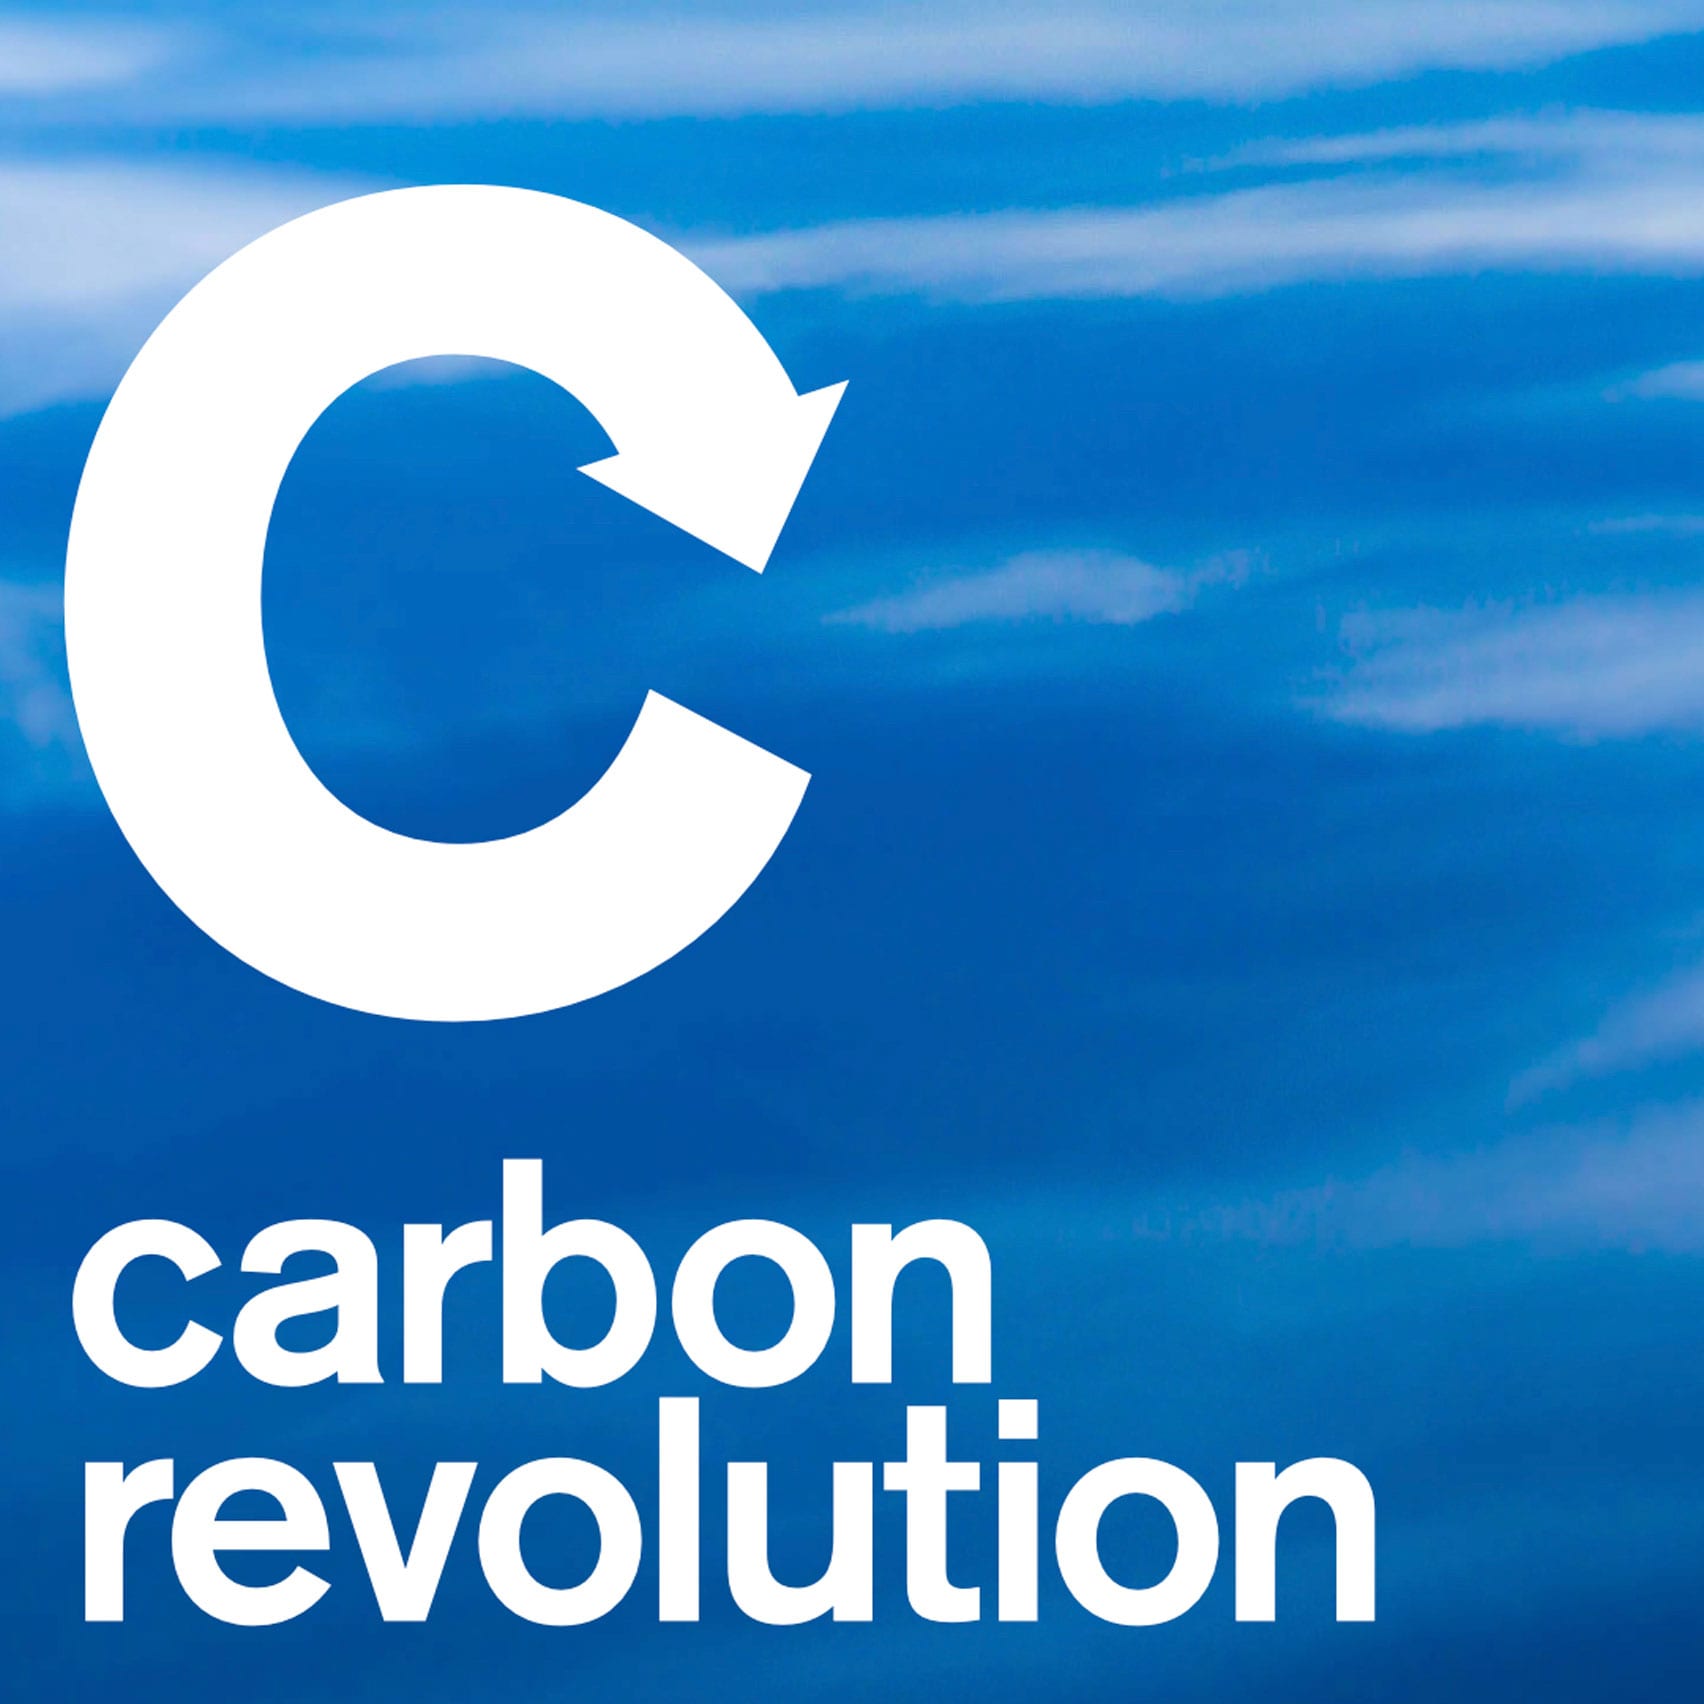 Carbon revolution logo